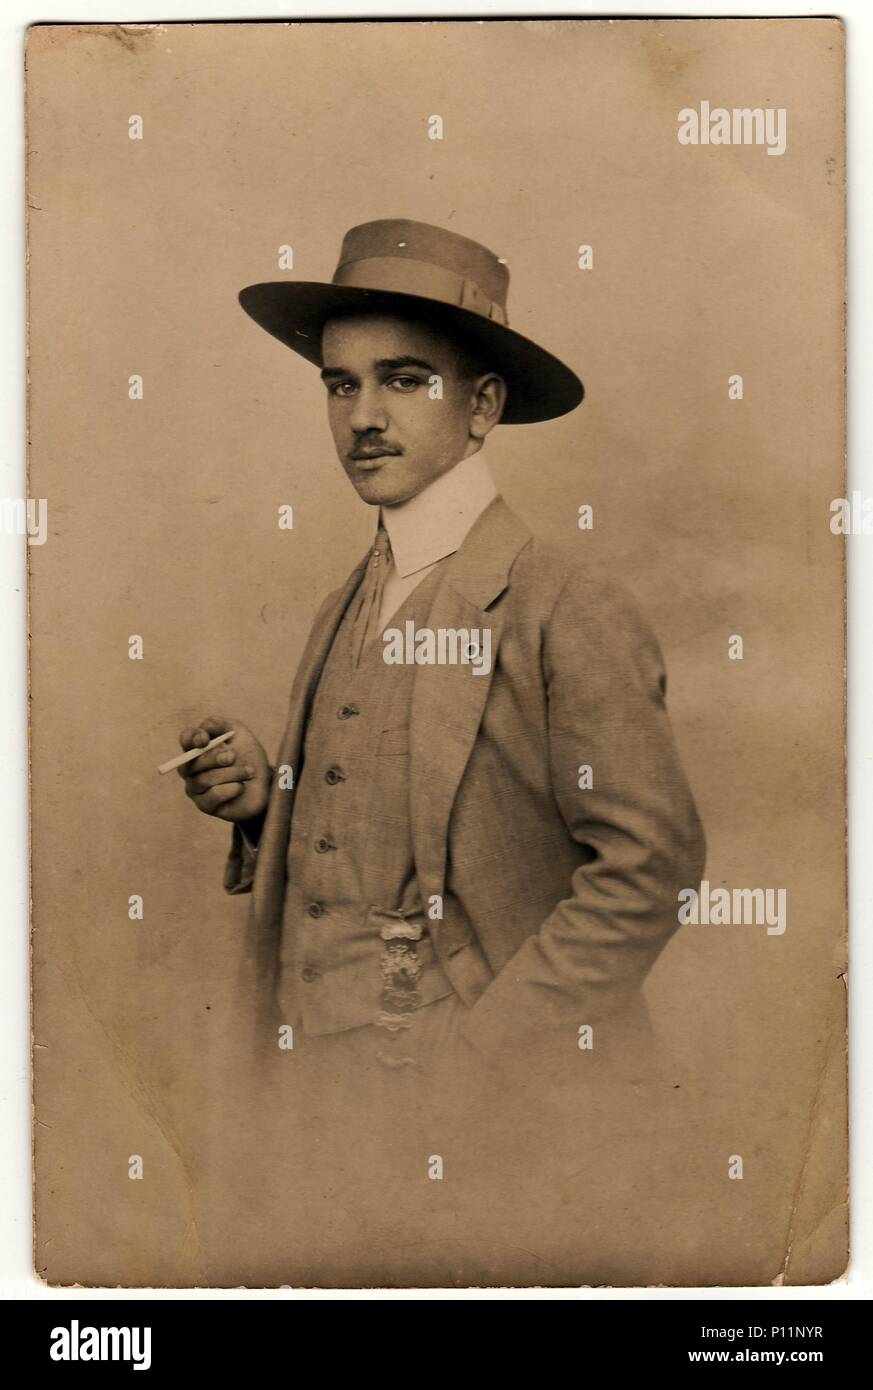 OLOMOUC, THE CZECHOSLOVAK REPUBLIC - CIRCA 1920s: Vintage photo shows dandy man with cigarette and hat. Antique black white photo. Stock Photo